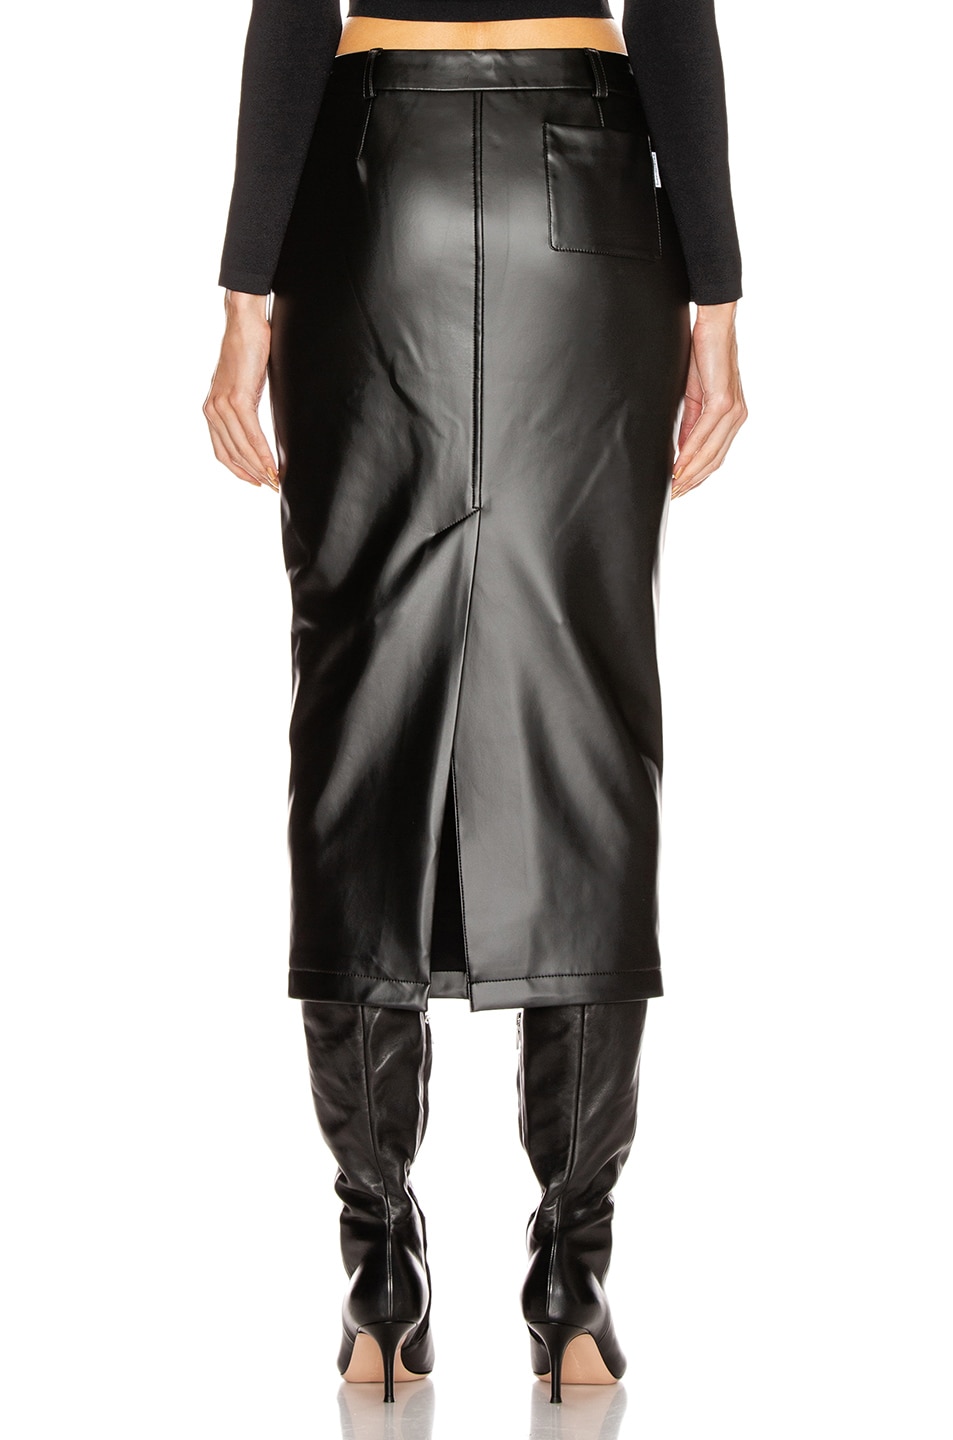 Alexander Wang Peg Skirt in Black | FWRD